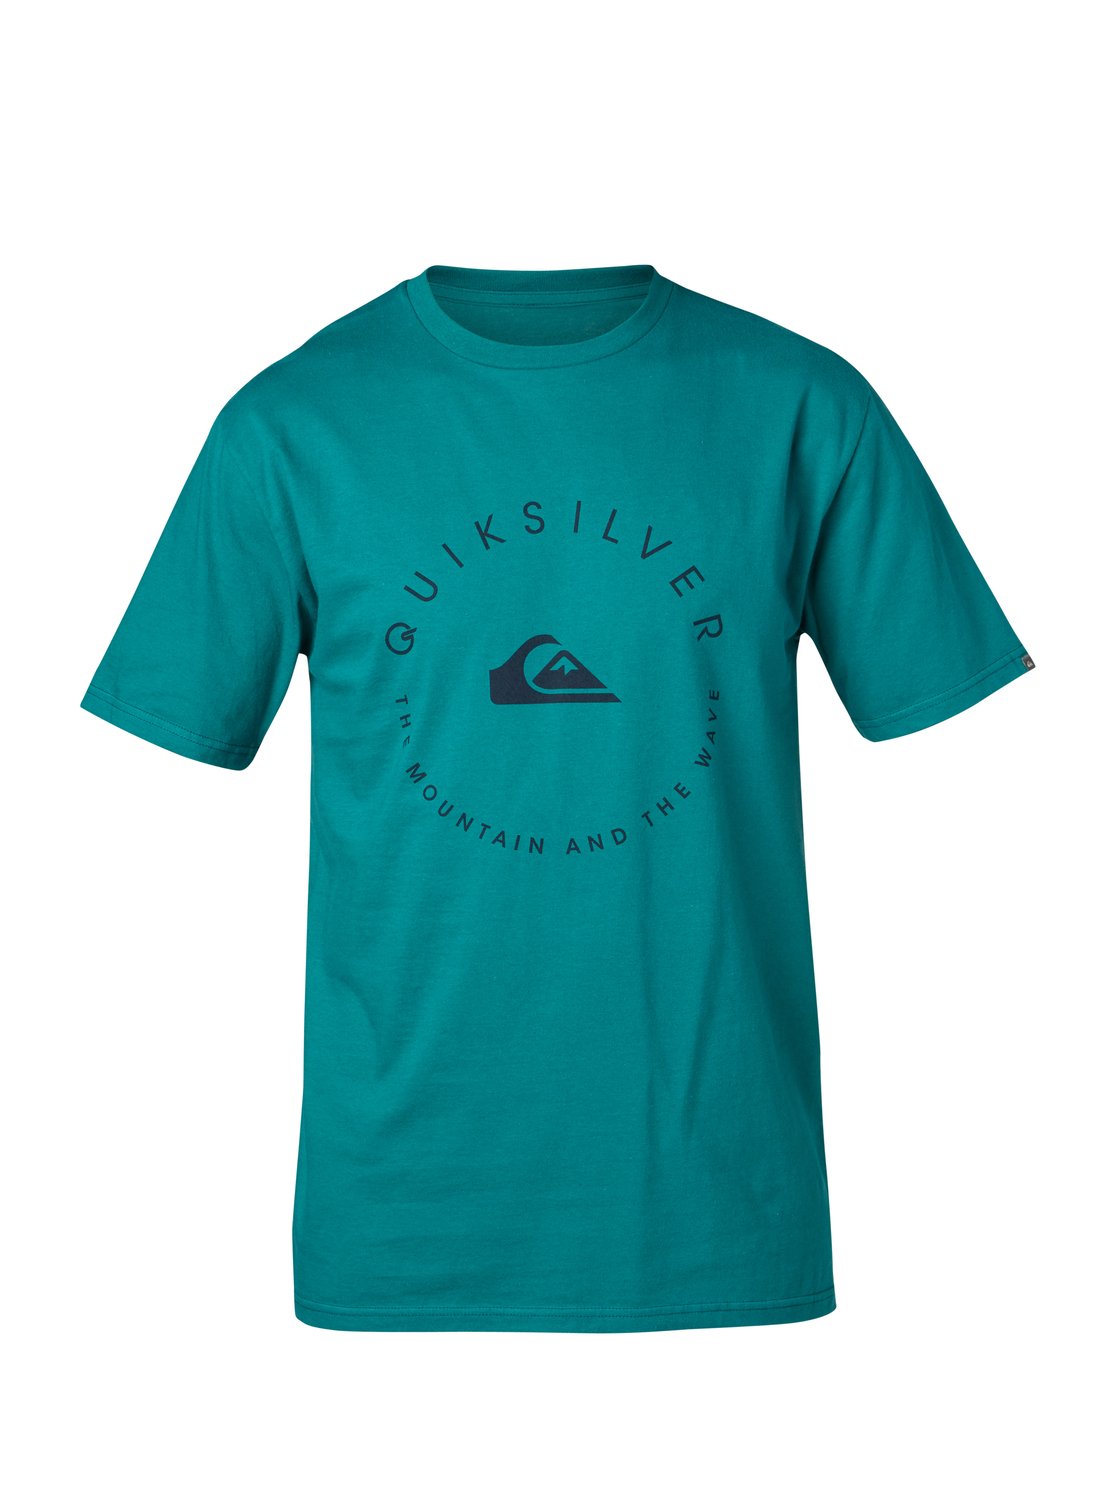 Good Circle Slim Fit T-Shirt AQYZT03038 | Quiksilver